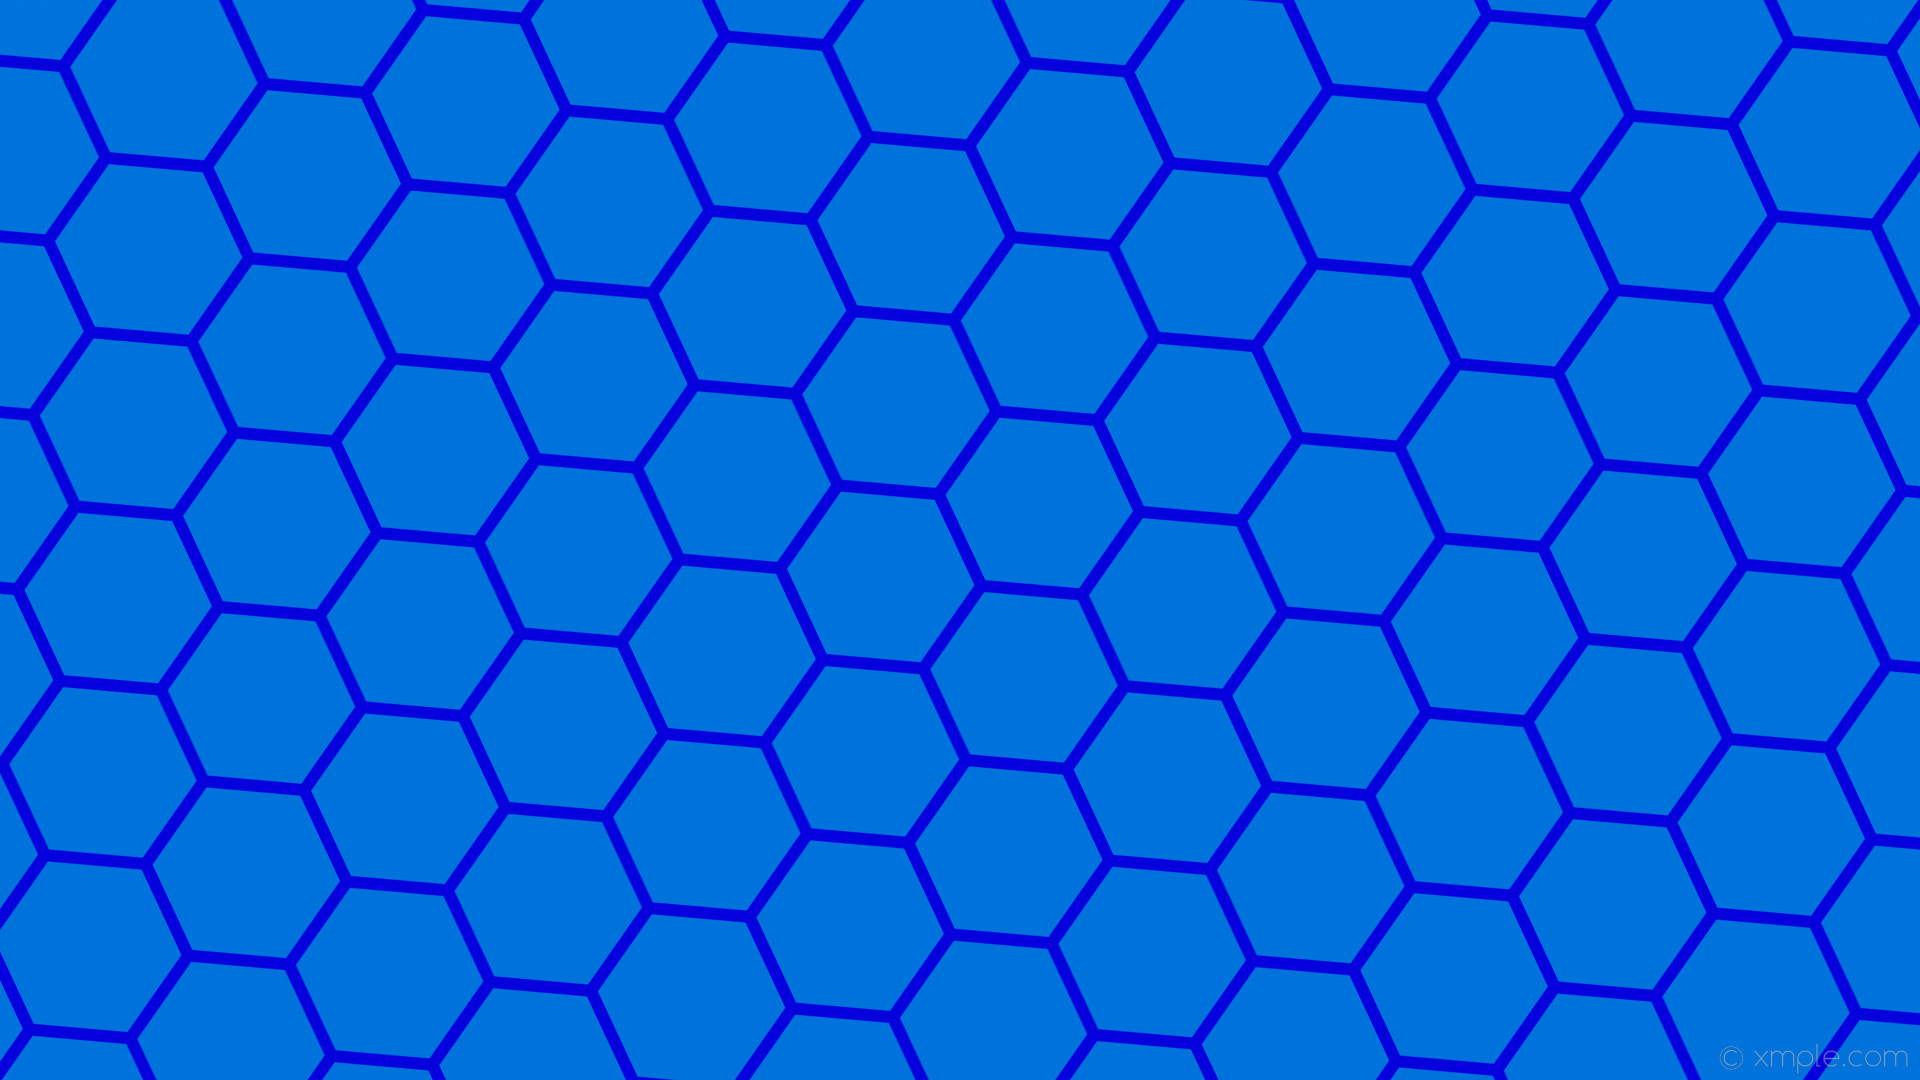 1920x1080 wallpaper beehive honeycomb hexagon azure blue #0072dc #0500dc diagonal 25Â°  12px 175px